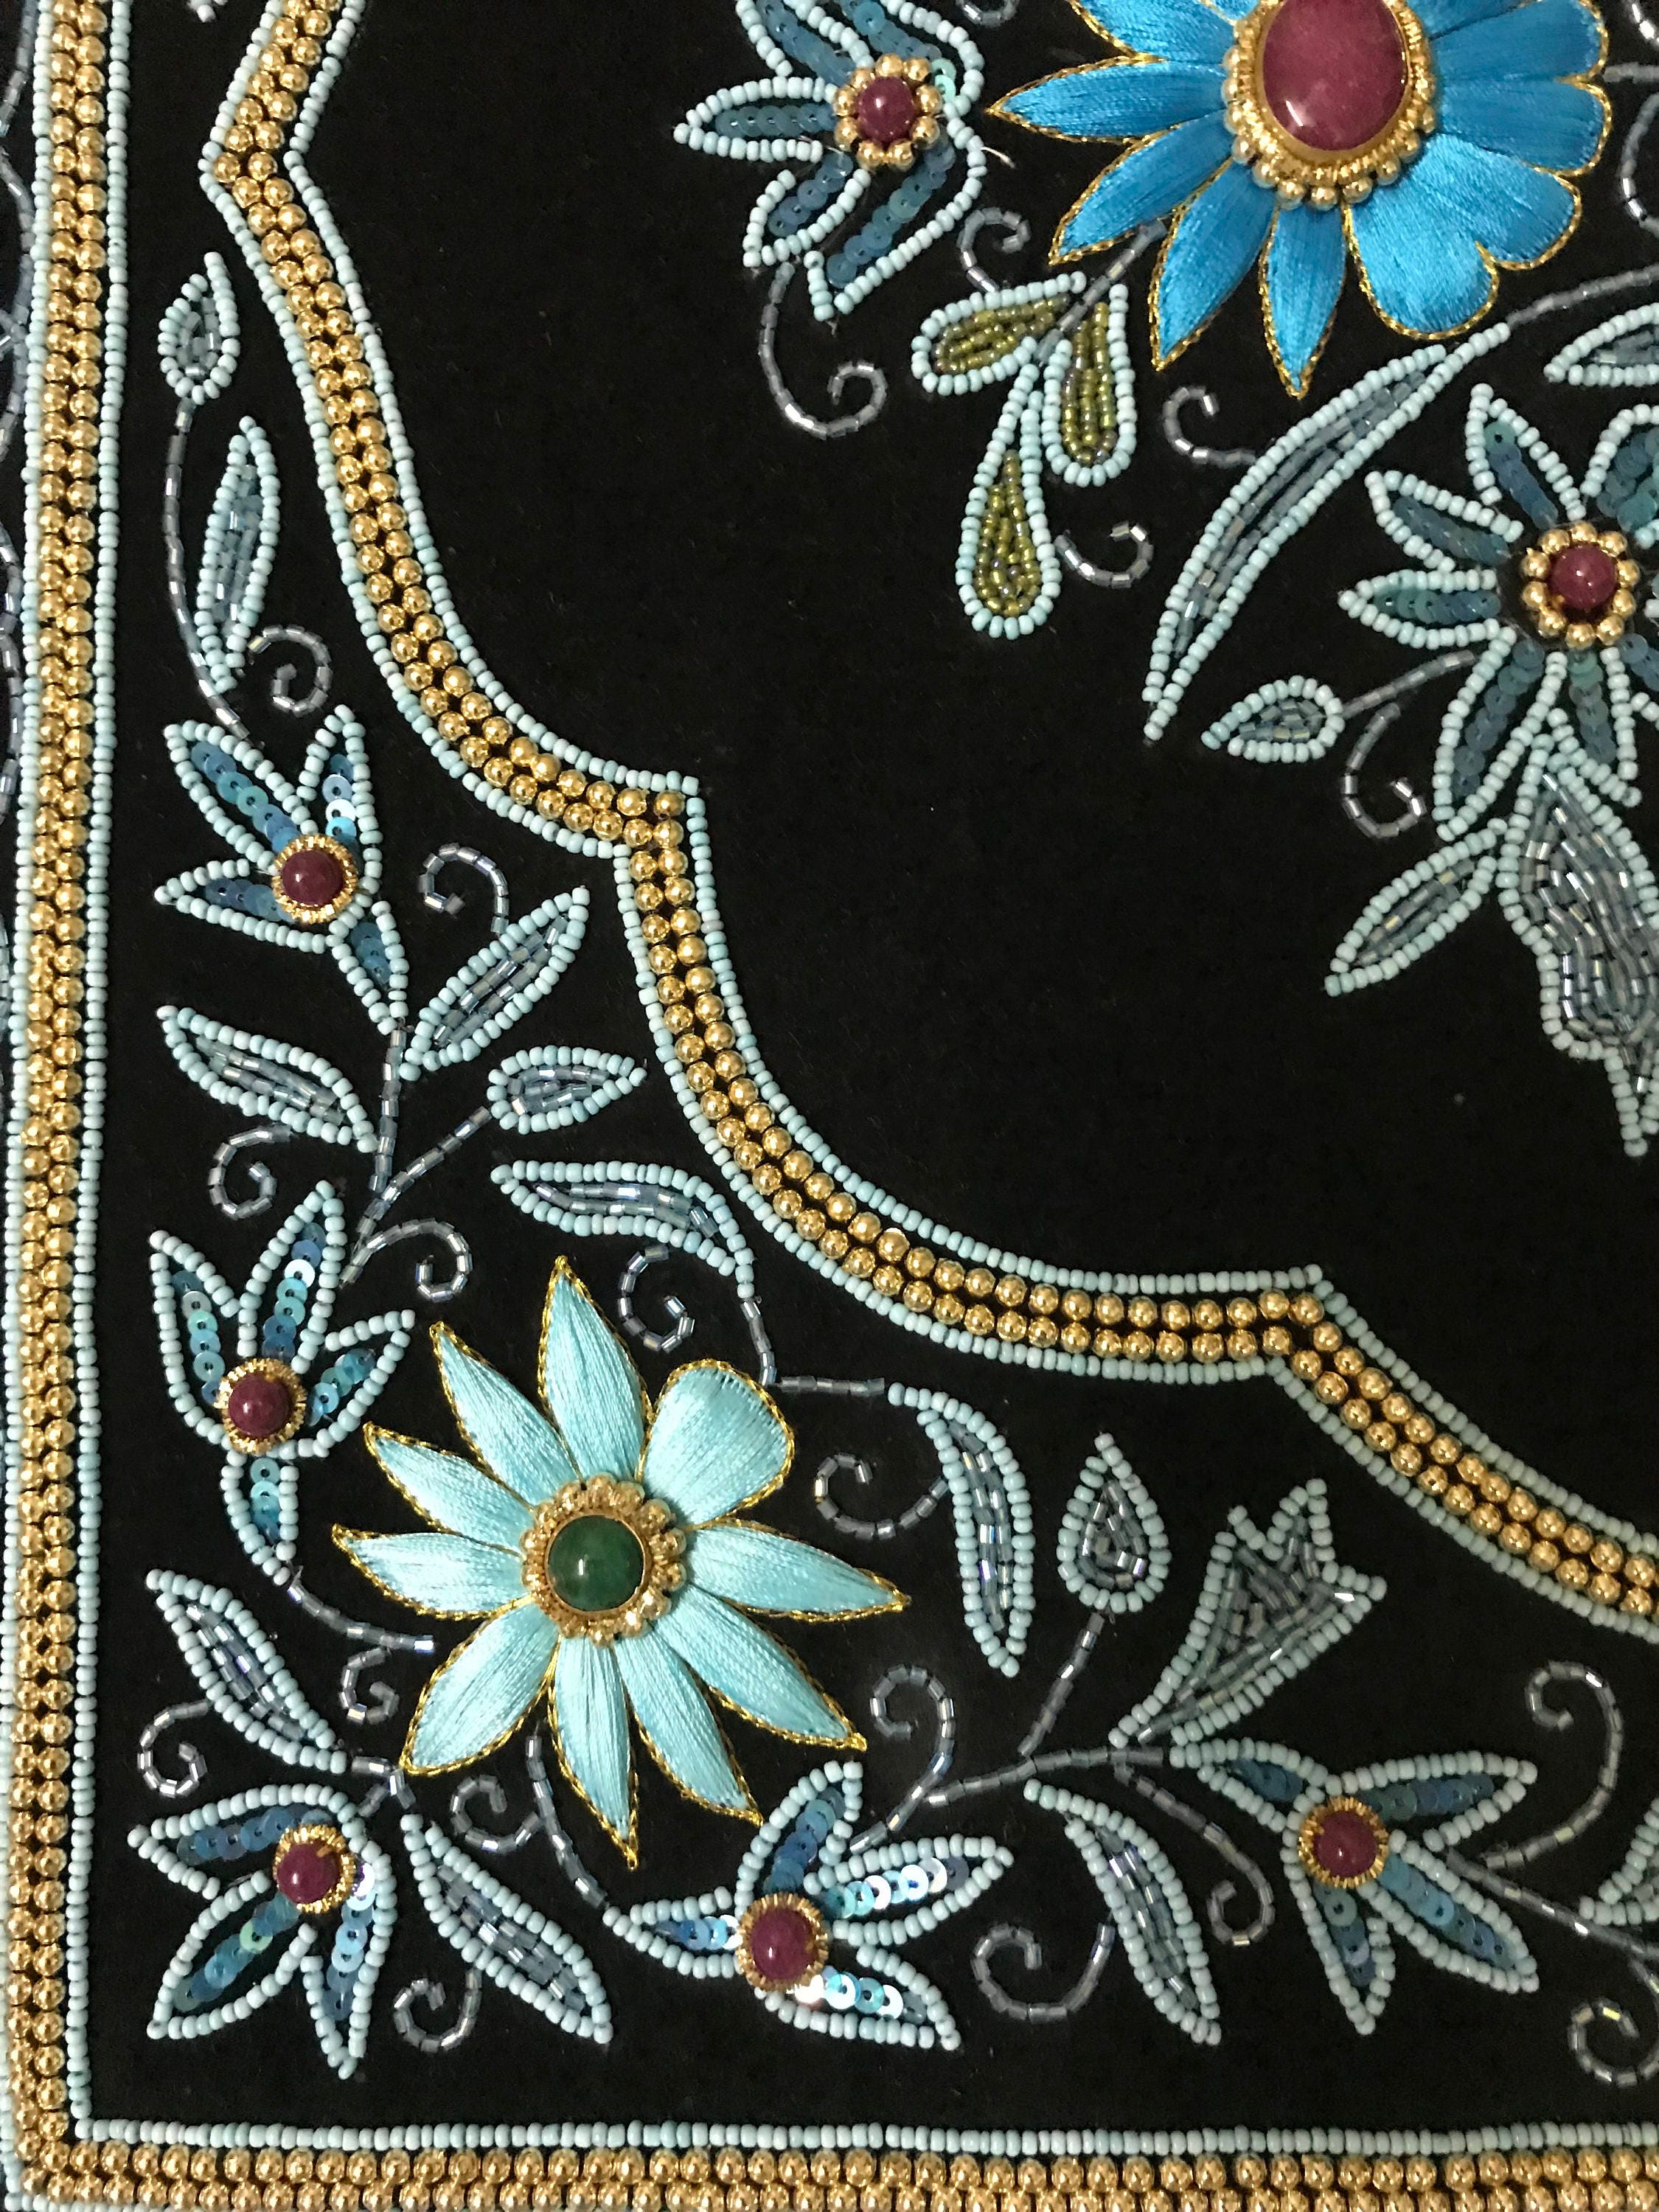 ON SALE Masterpiece Jewel Carpet Indian Carpet Wall Hanging - Etsy UK